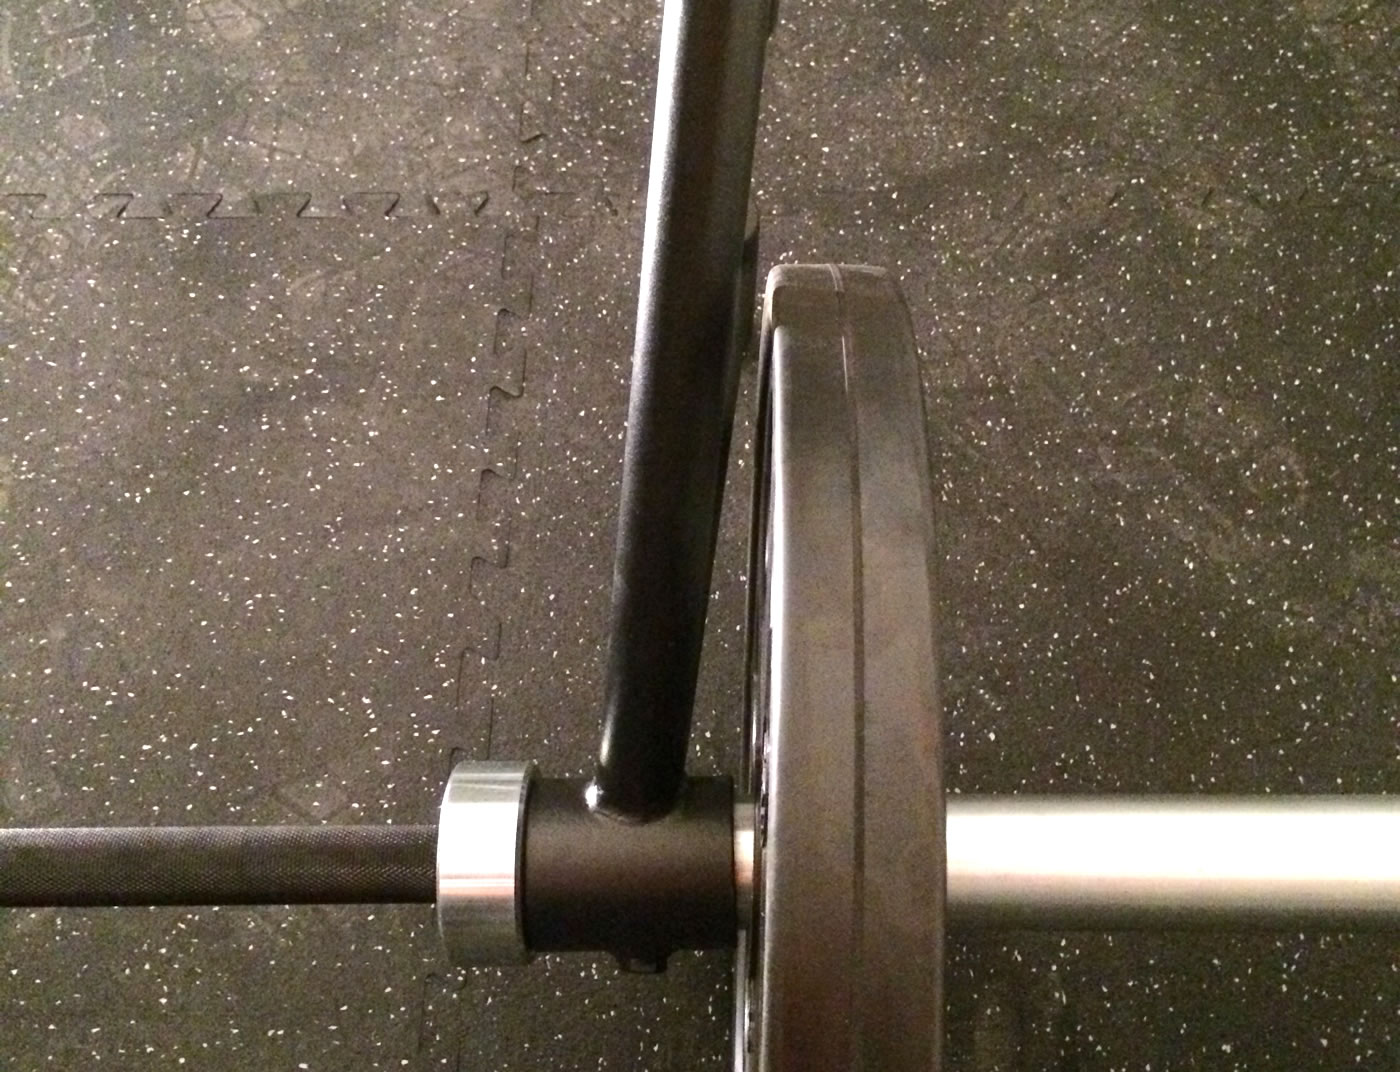 Home gym - CFF landmine hd t-bar handle olympic bar rowing attachment.